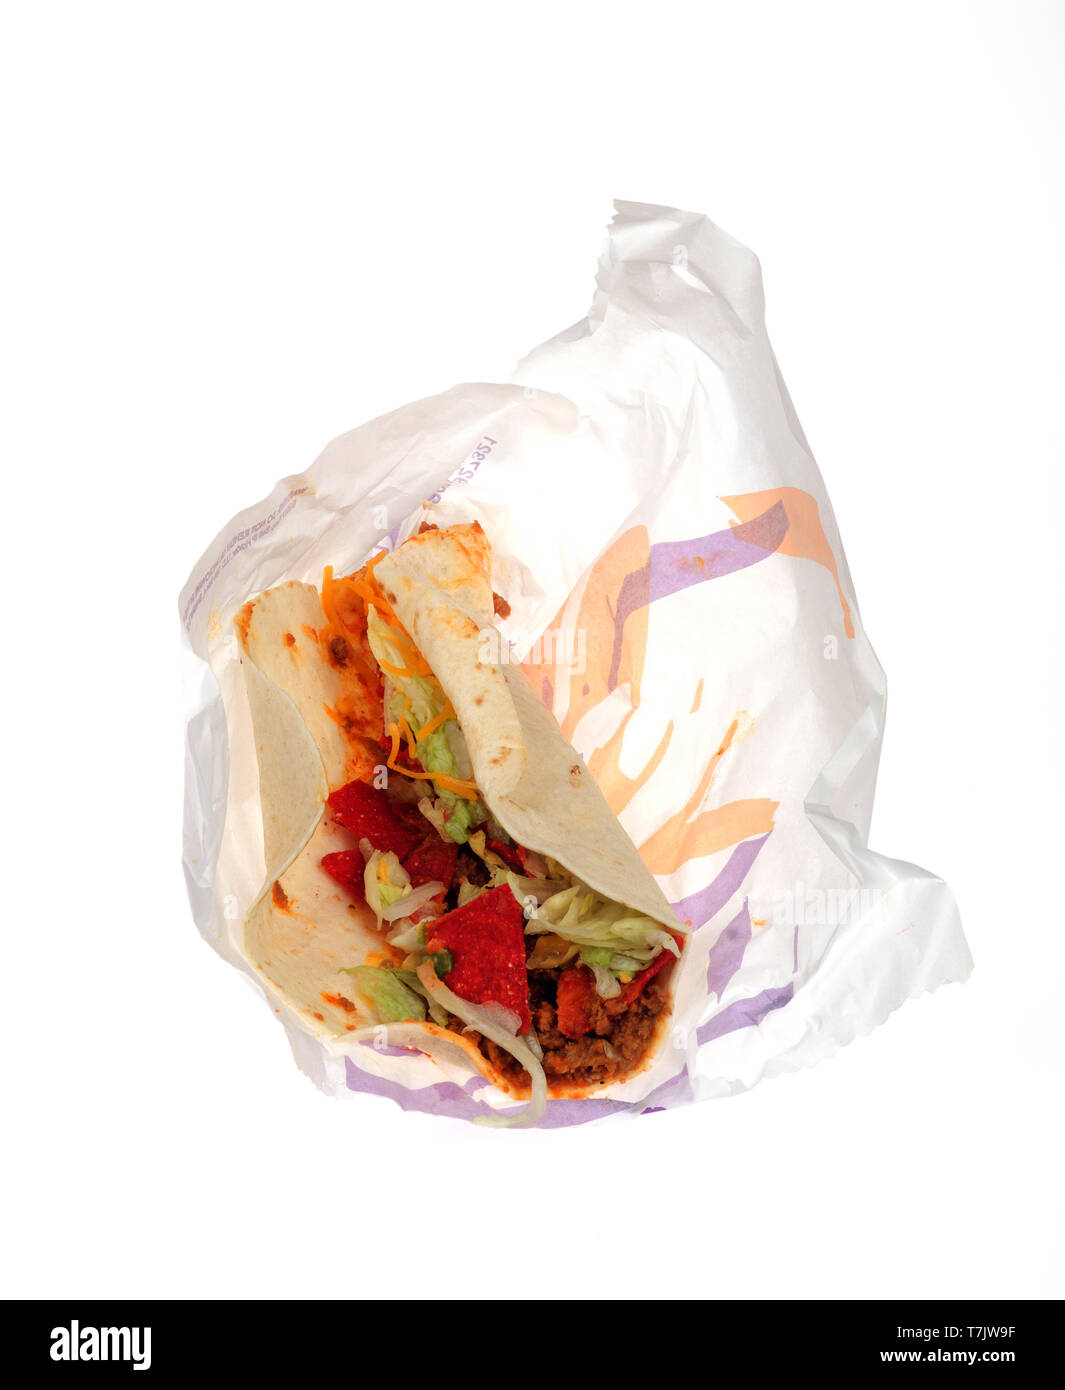 Taco Bell taco sur l'emballage Banque D'Images